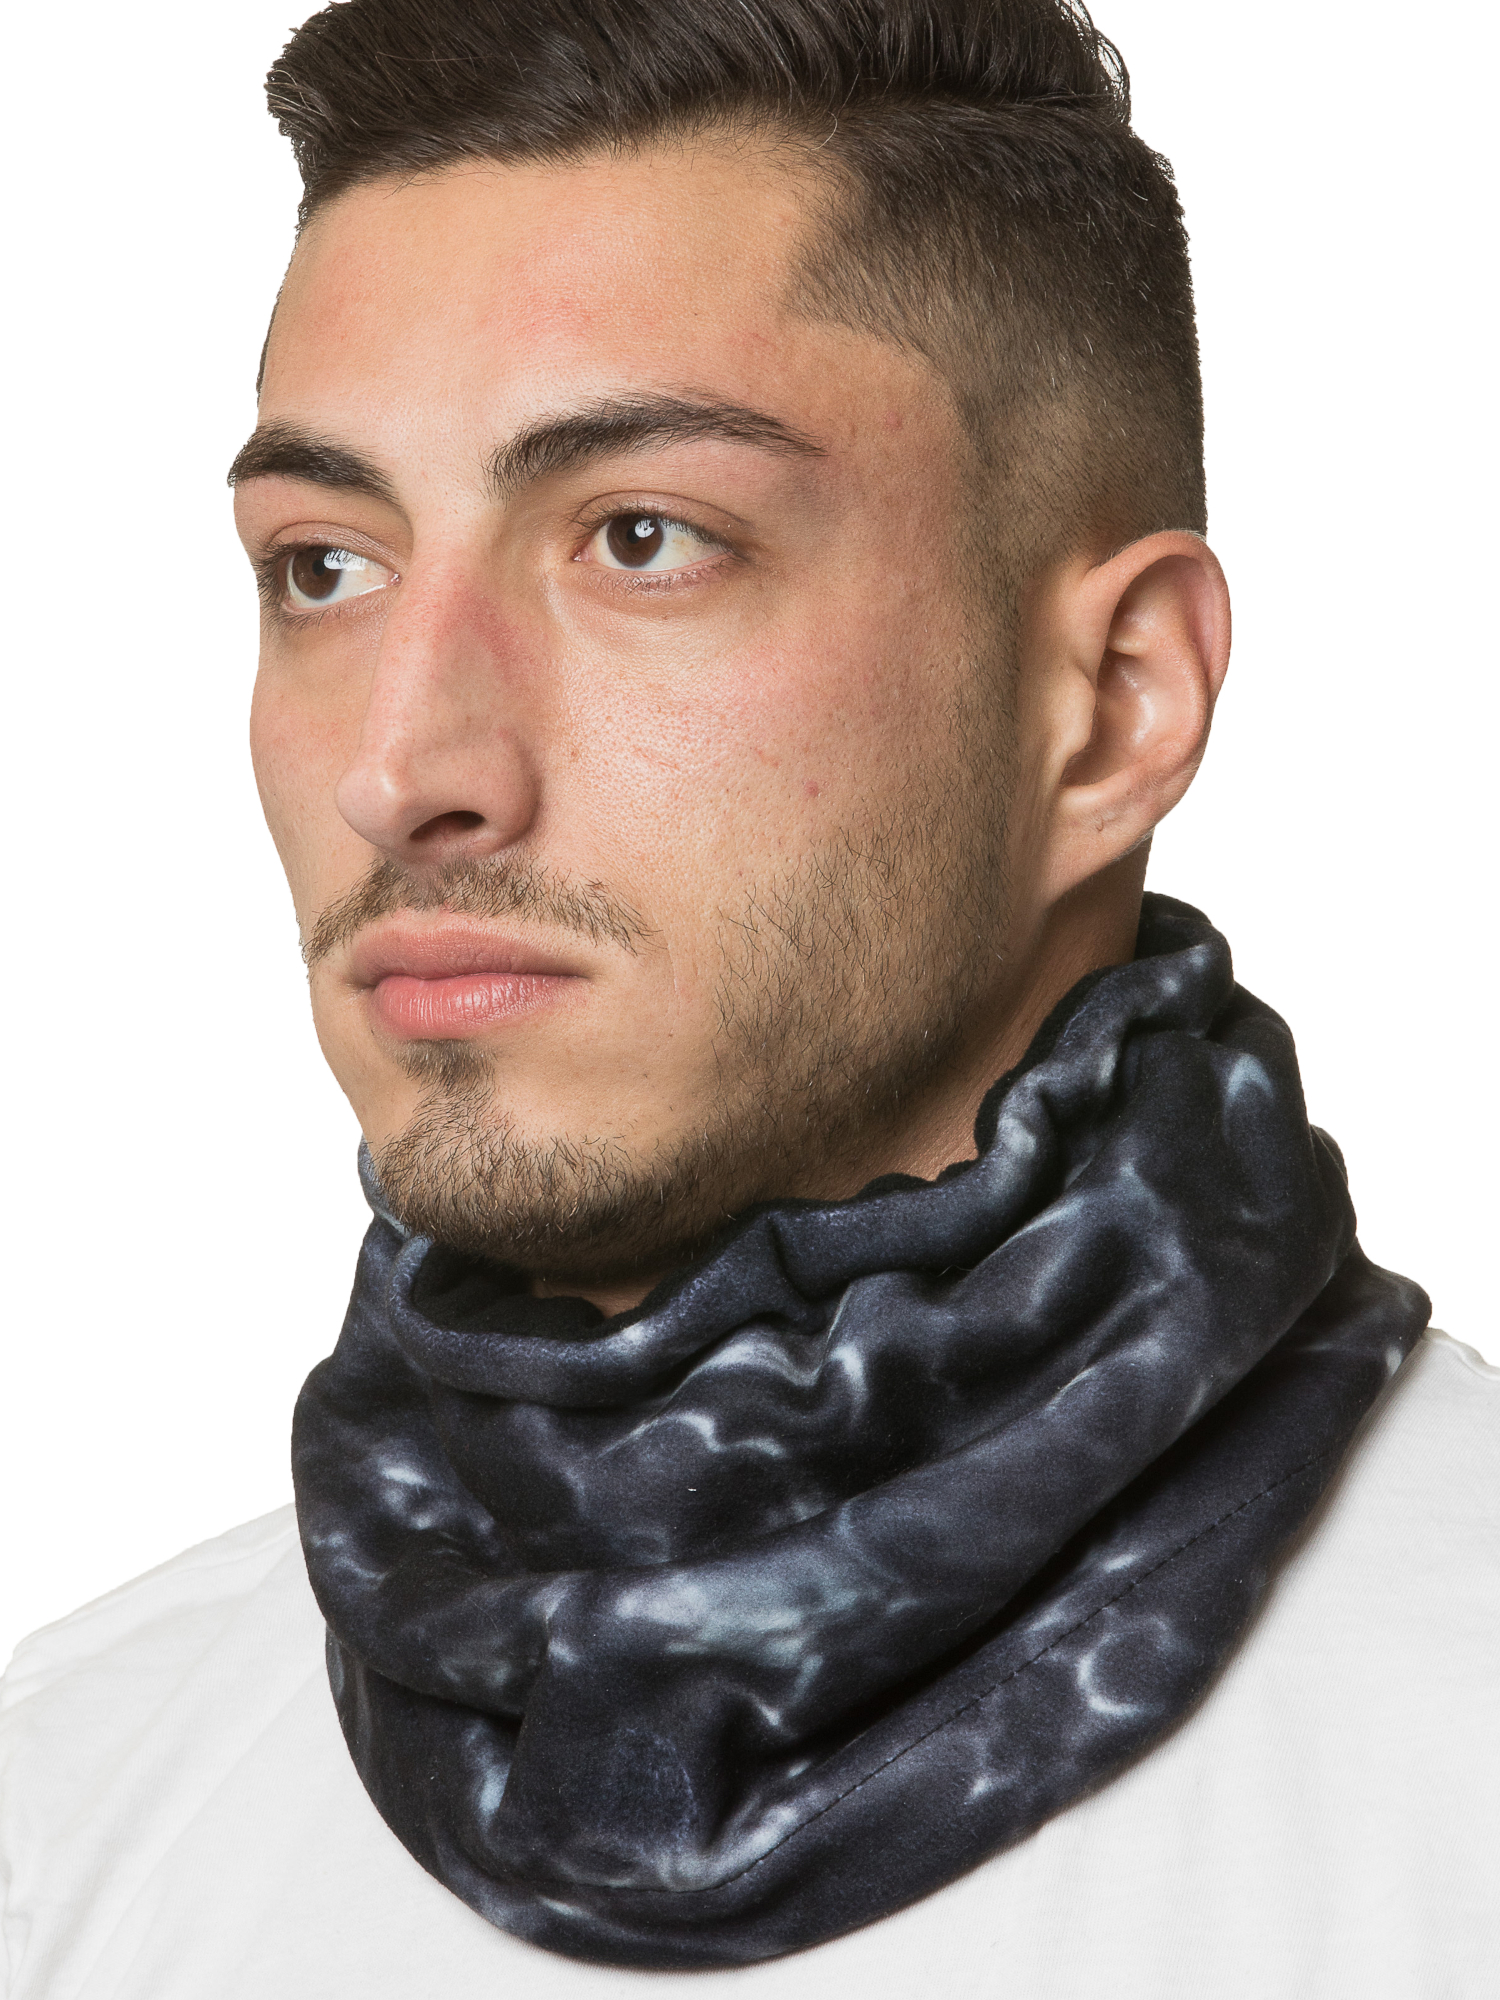 Aqua Design Neck Warmer Men Gaiter: Winter Cold Weather Camo Fleece Face Mask: Black Water - image 1 of 6